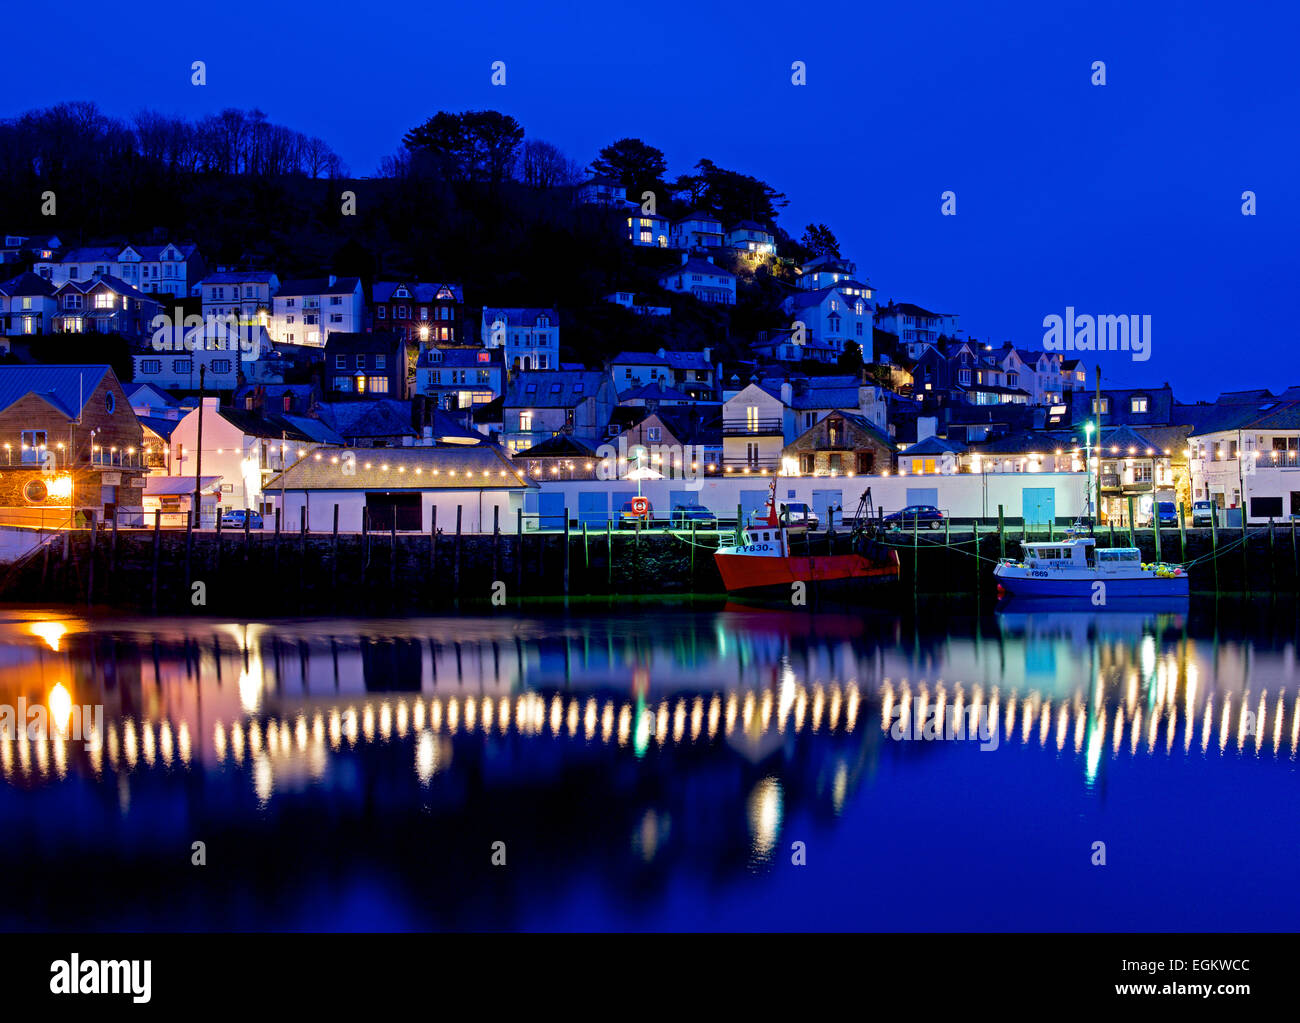 Looe, a fishing town, at night, Cornwall, England UK Stock Photo